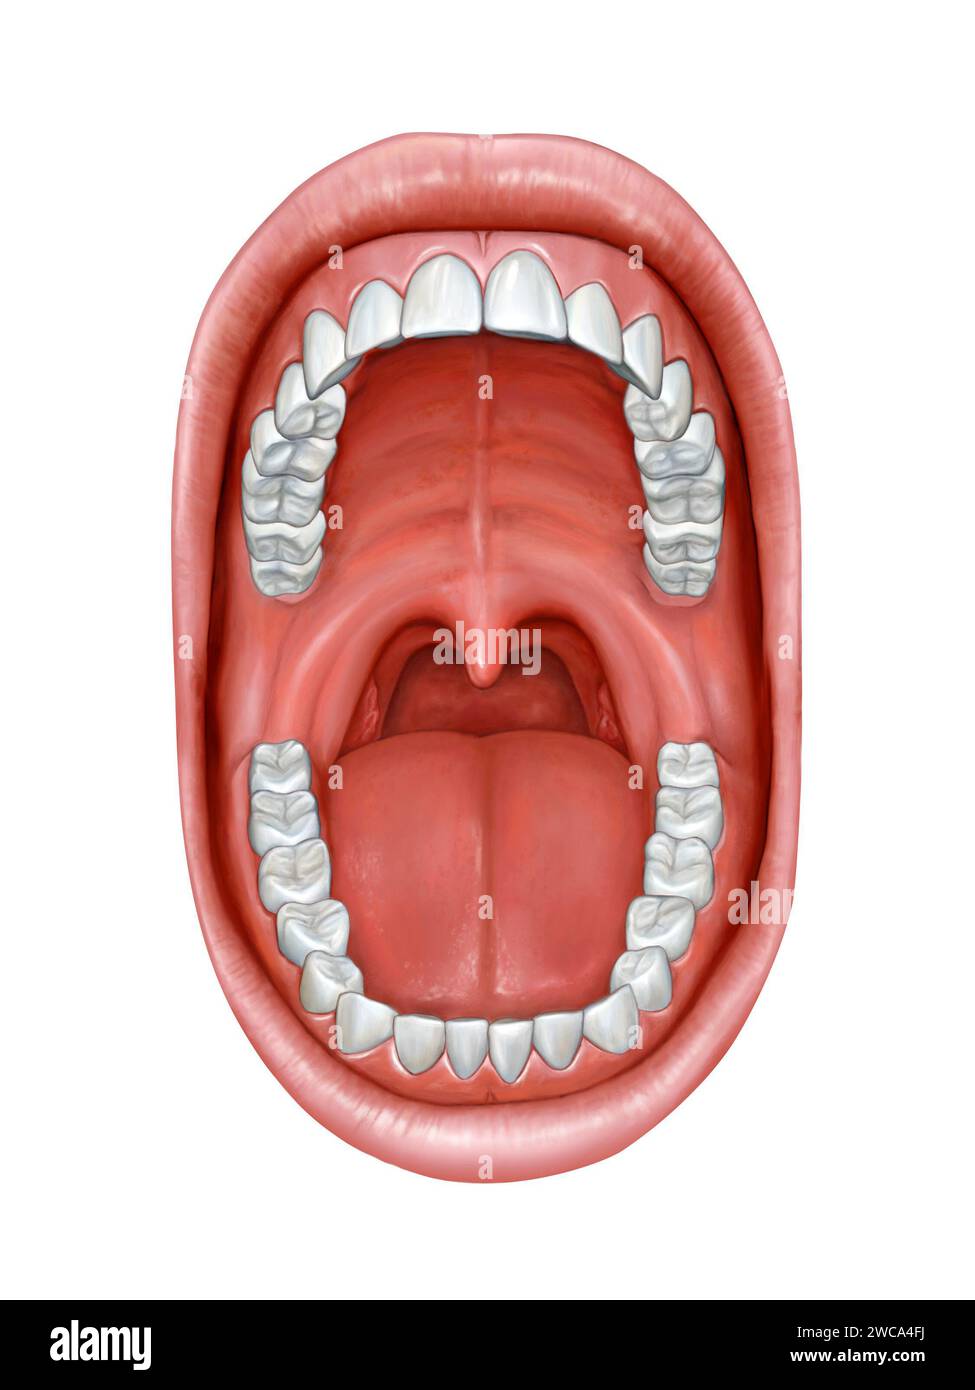 Anatomy of the mouth. Digital illustration. Stock Photo